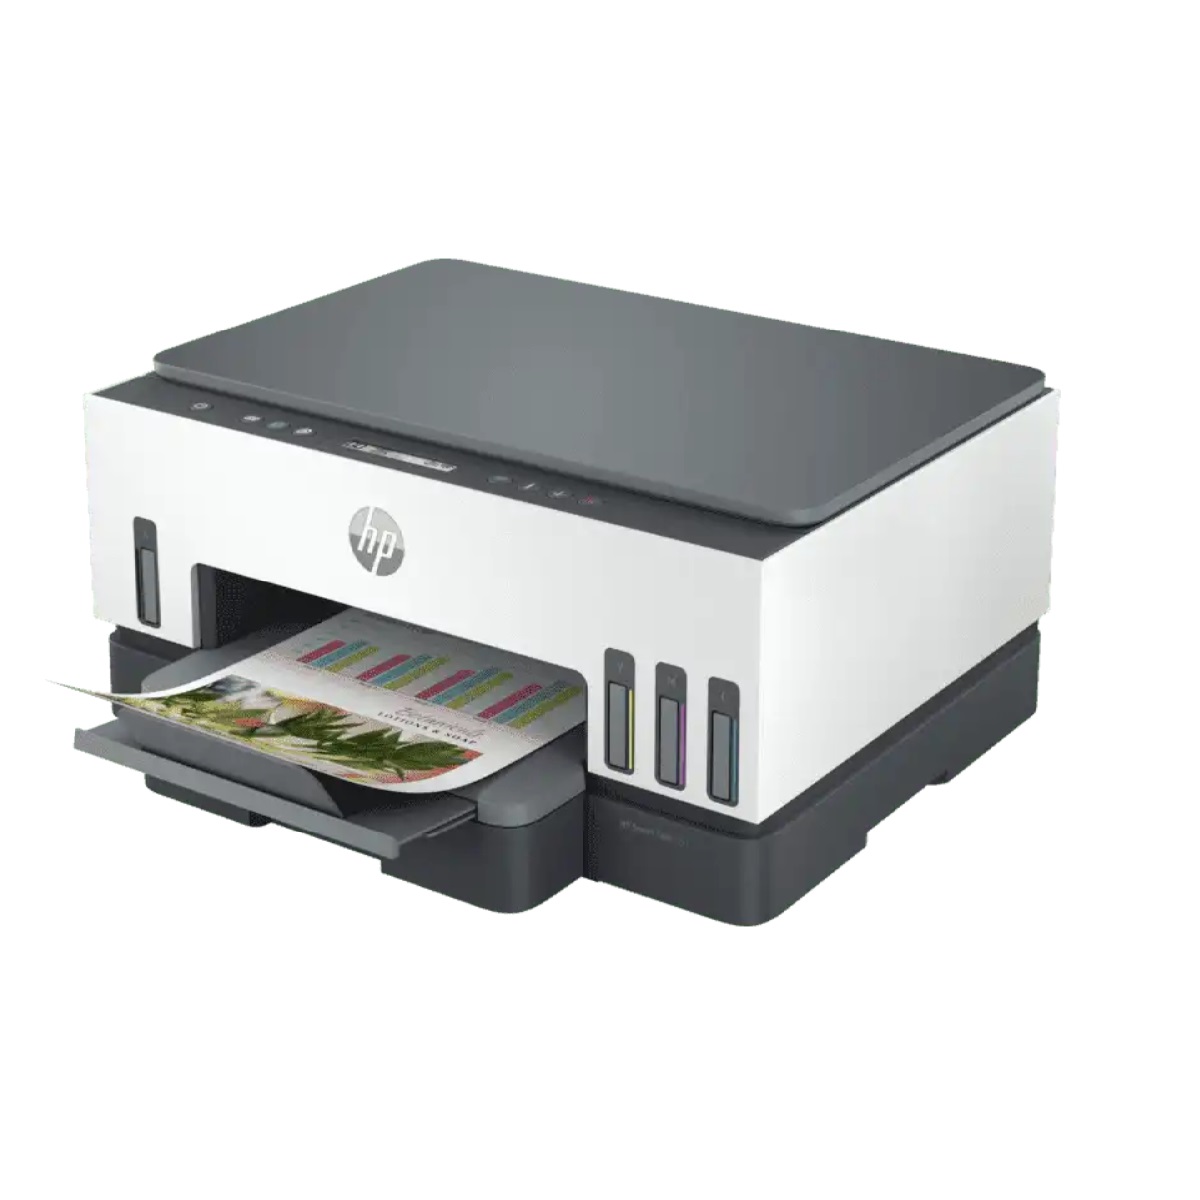 Impresoras Compatibles: Hp Smart Tank 200